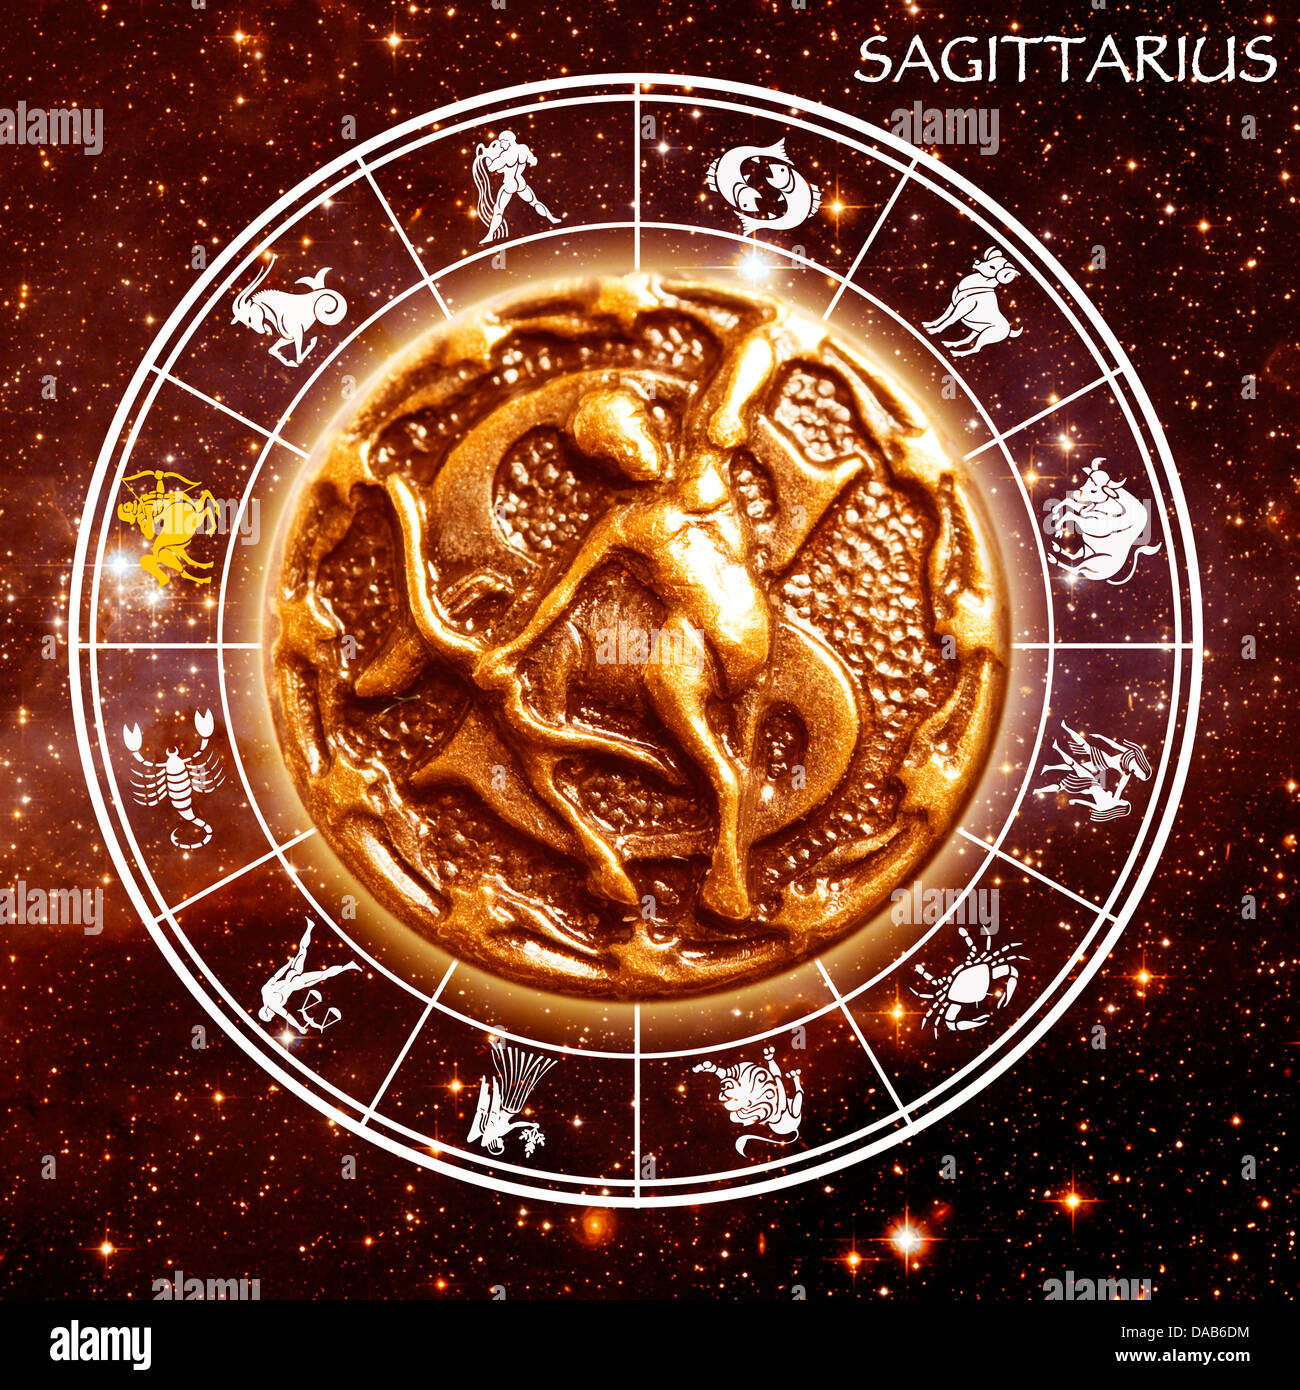 astrological sign of Sagittarius Stock Photo